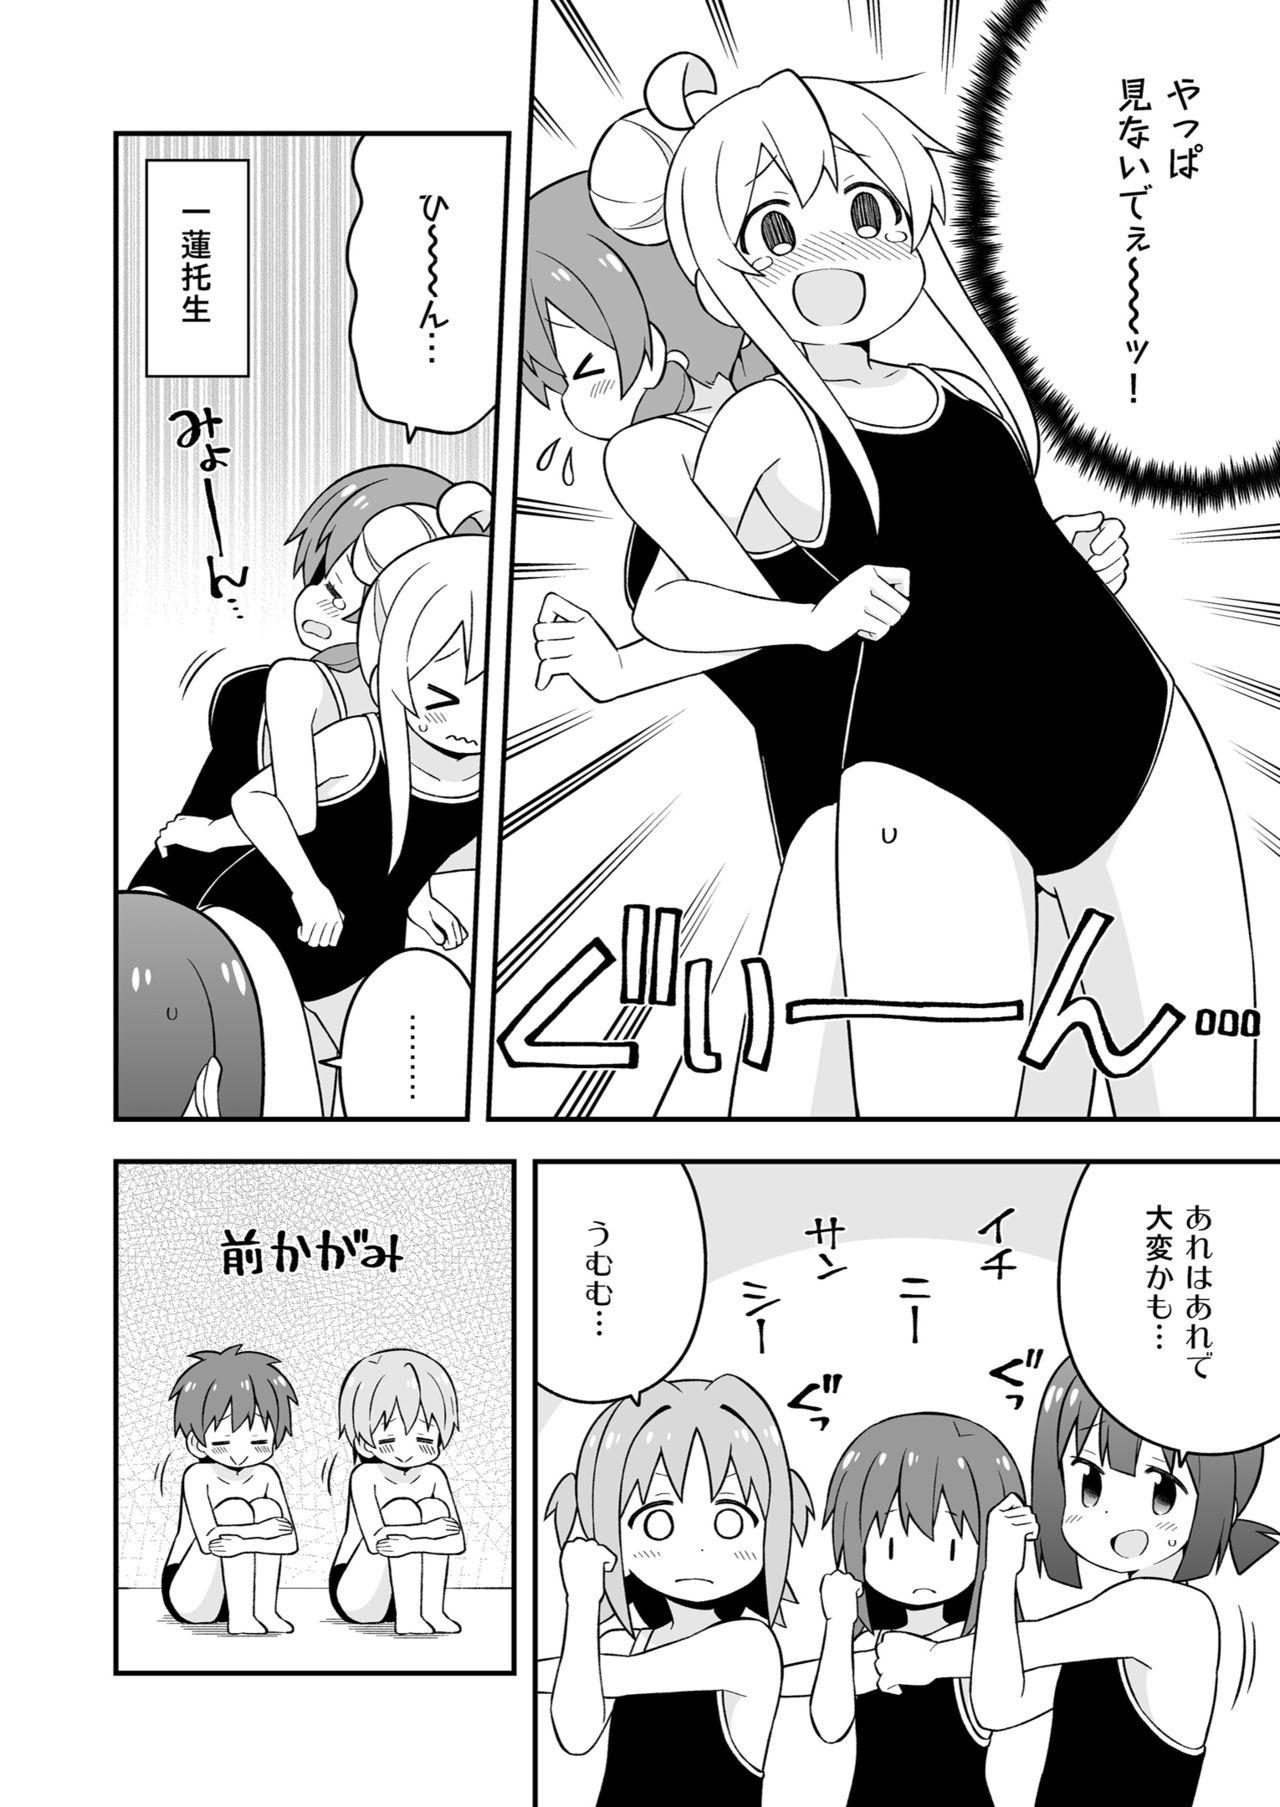 Mommy Onii-chan wa Oshimai! 17 Flagra - Page 10